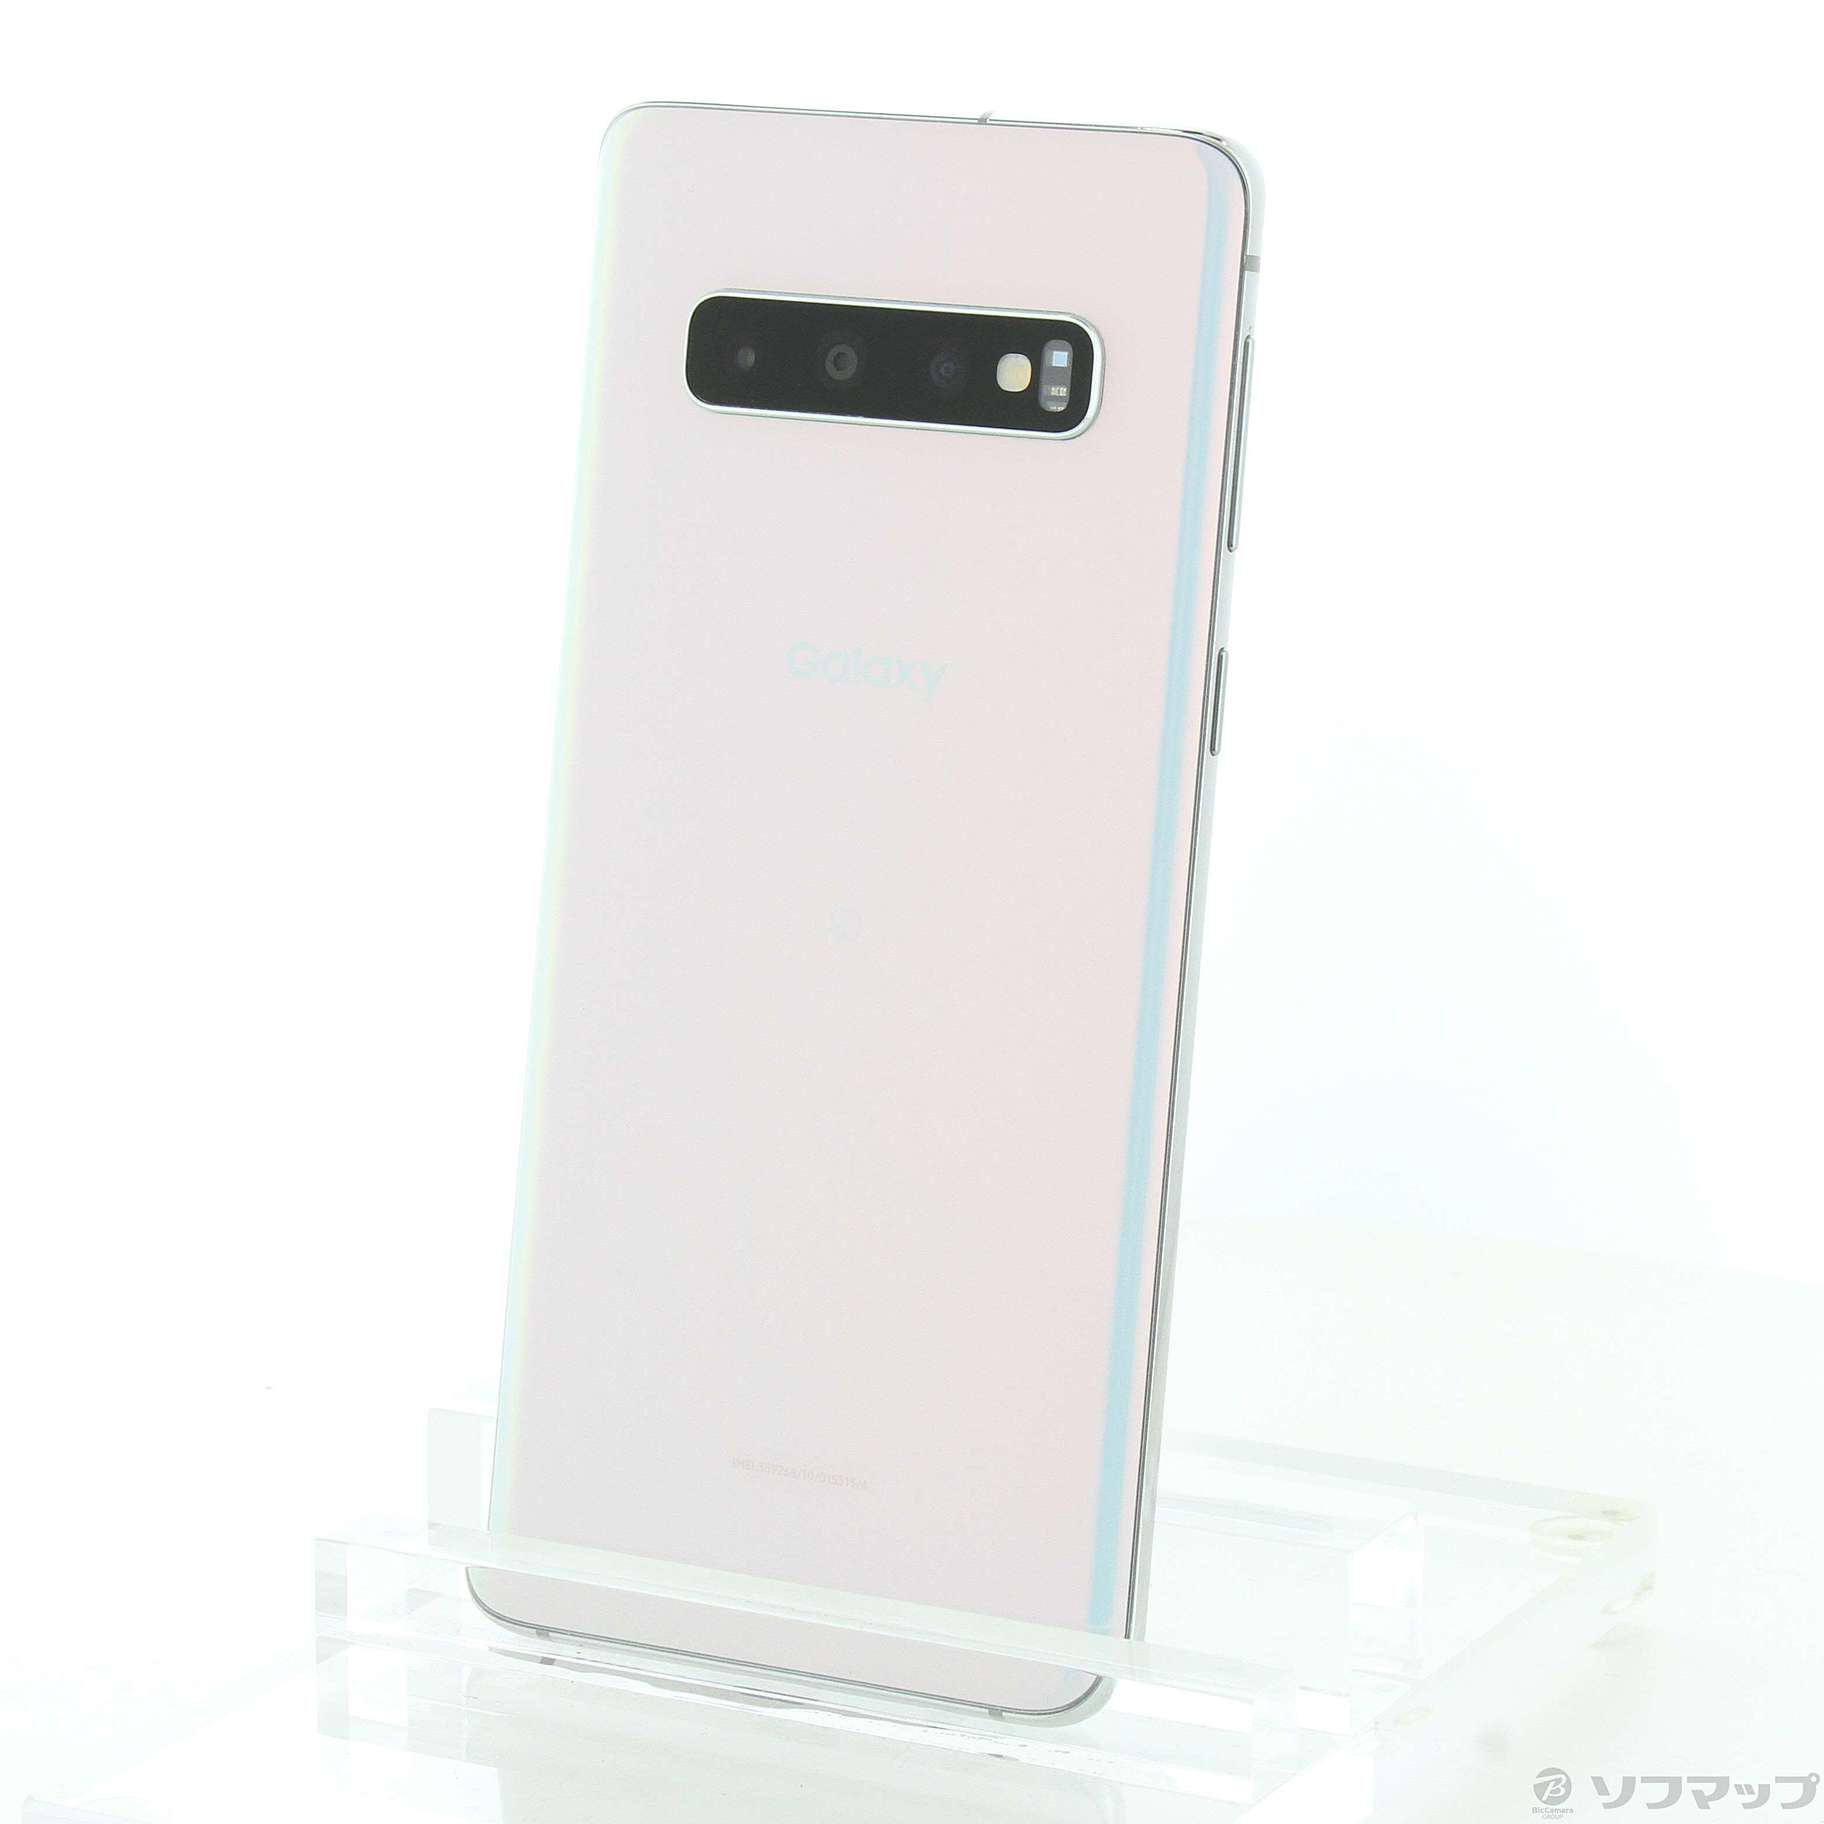 Samsung GALAXY S10 Prism White G-973U値下げSC-03L - www ...